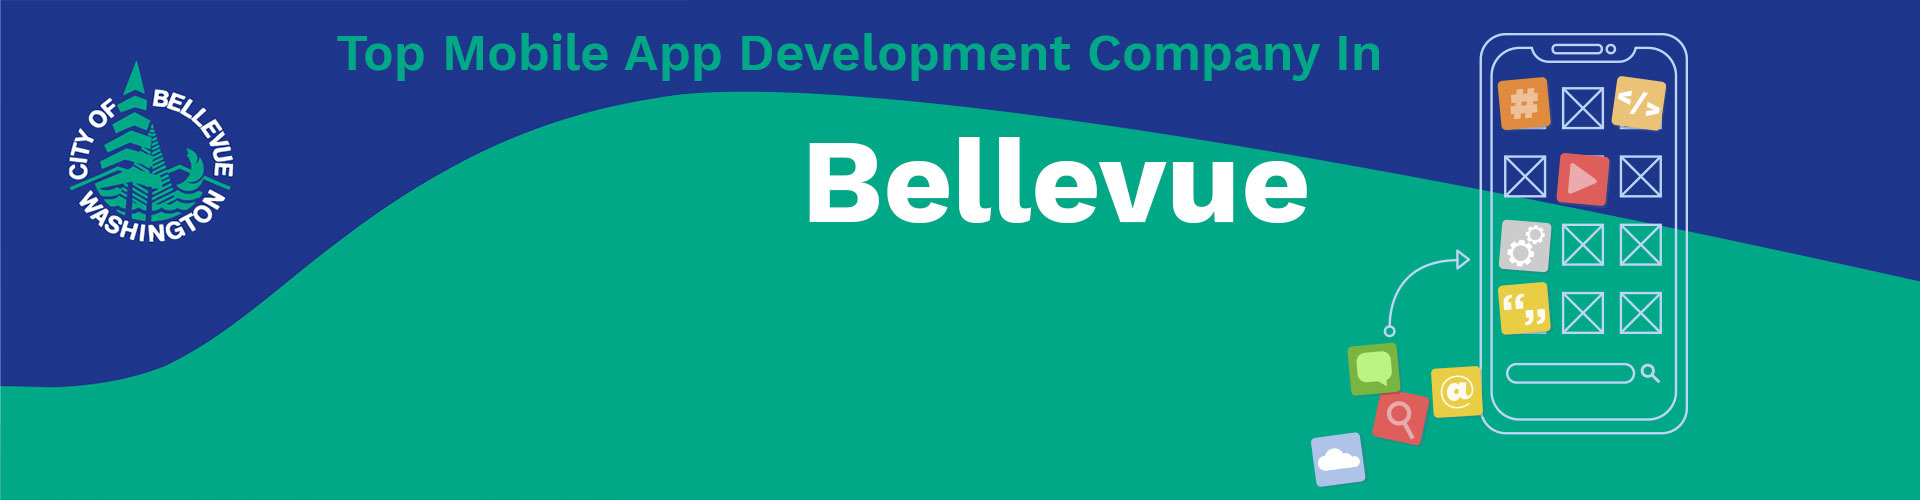 mobile app development company bellevue